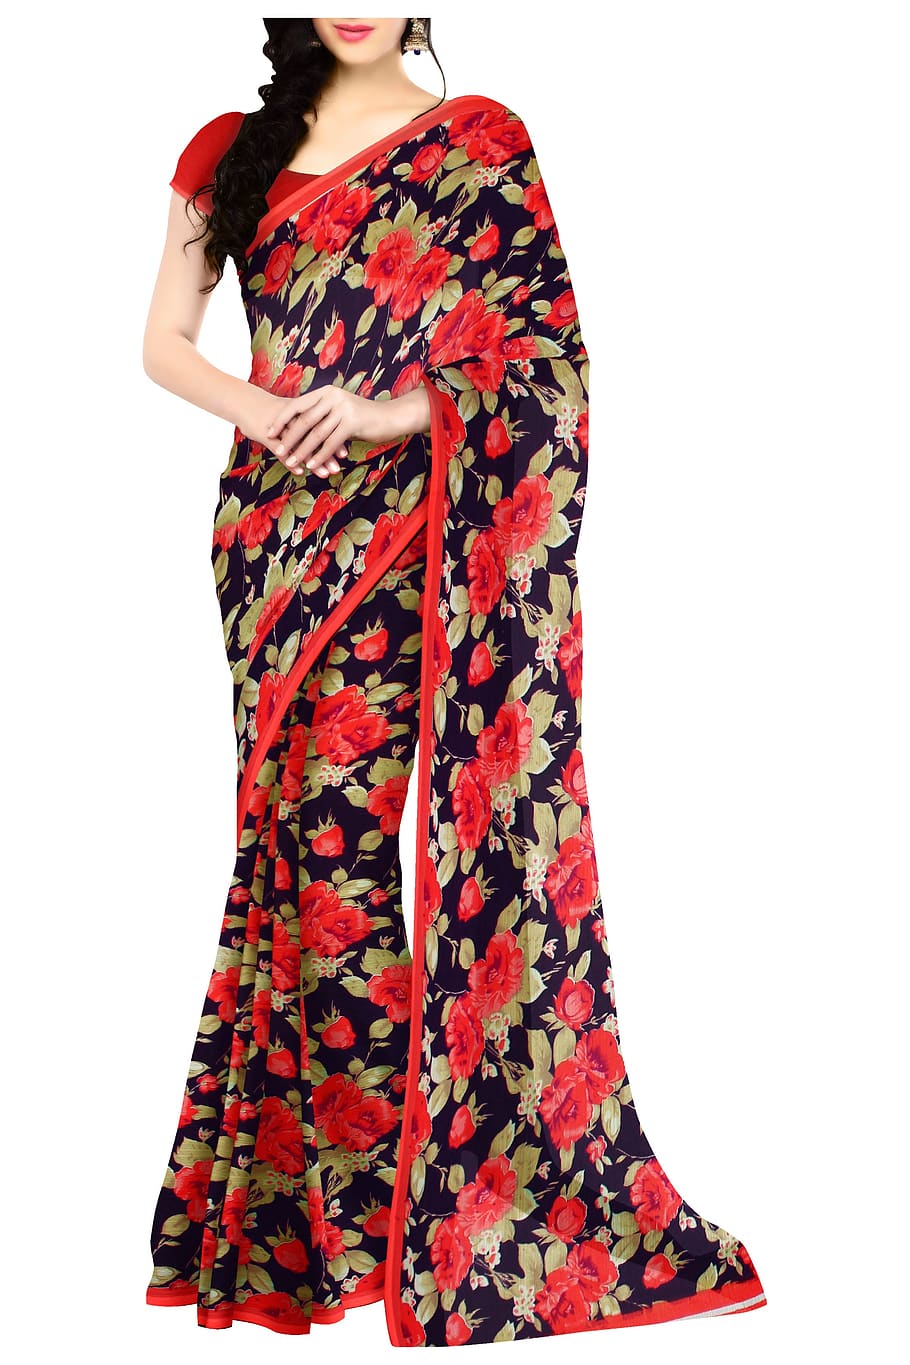 120267 Ethnic wear, Shriya Saran, Traditional, Actress, Saree - Rare  Gallery HD Wallpapers